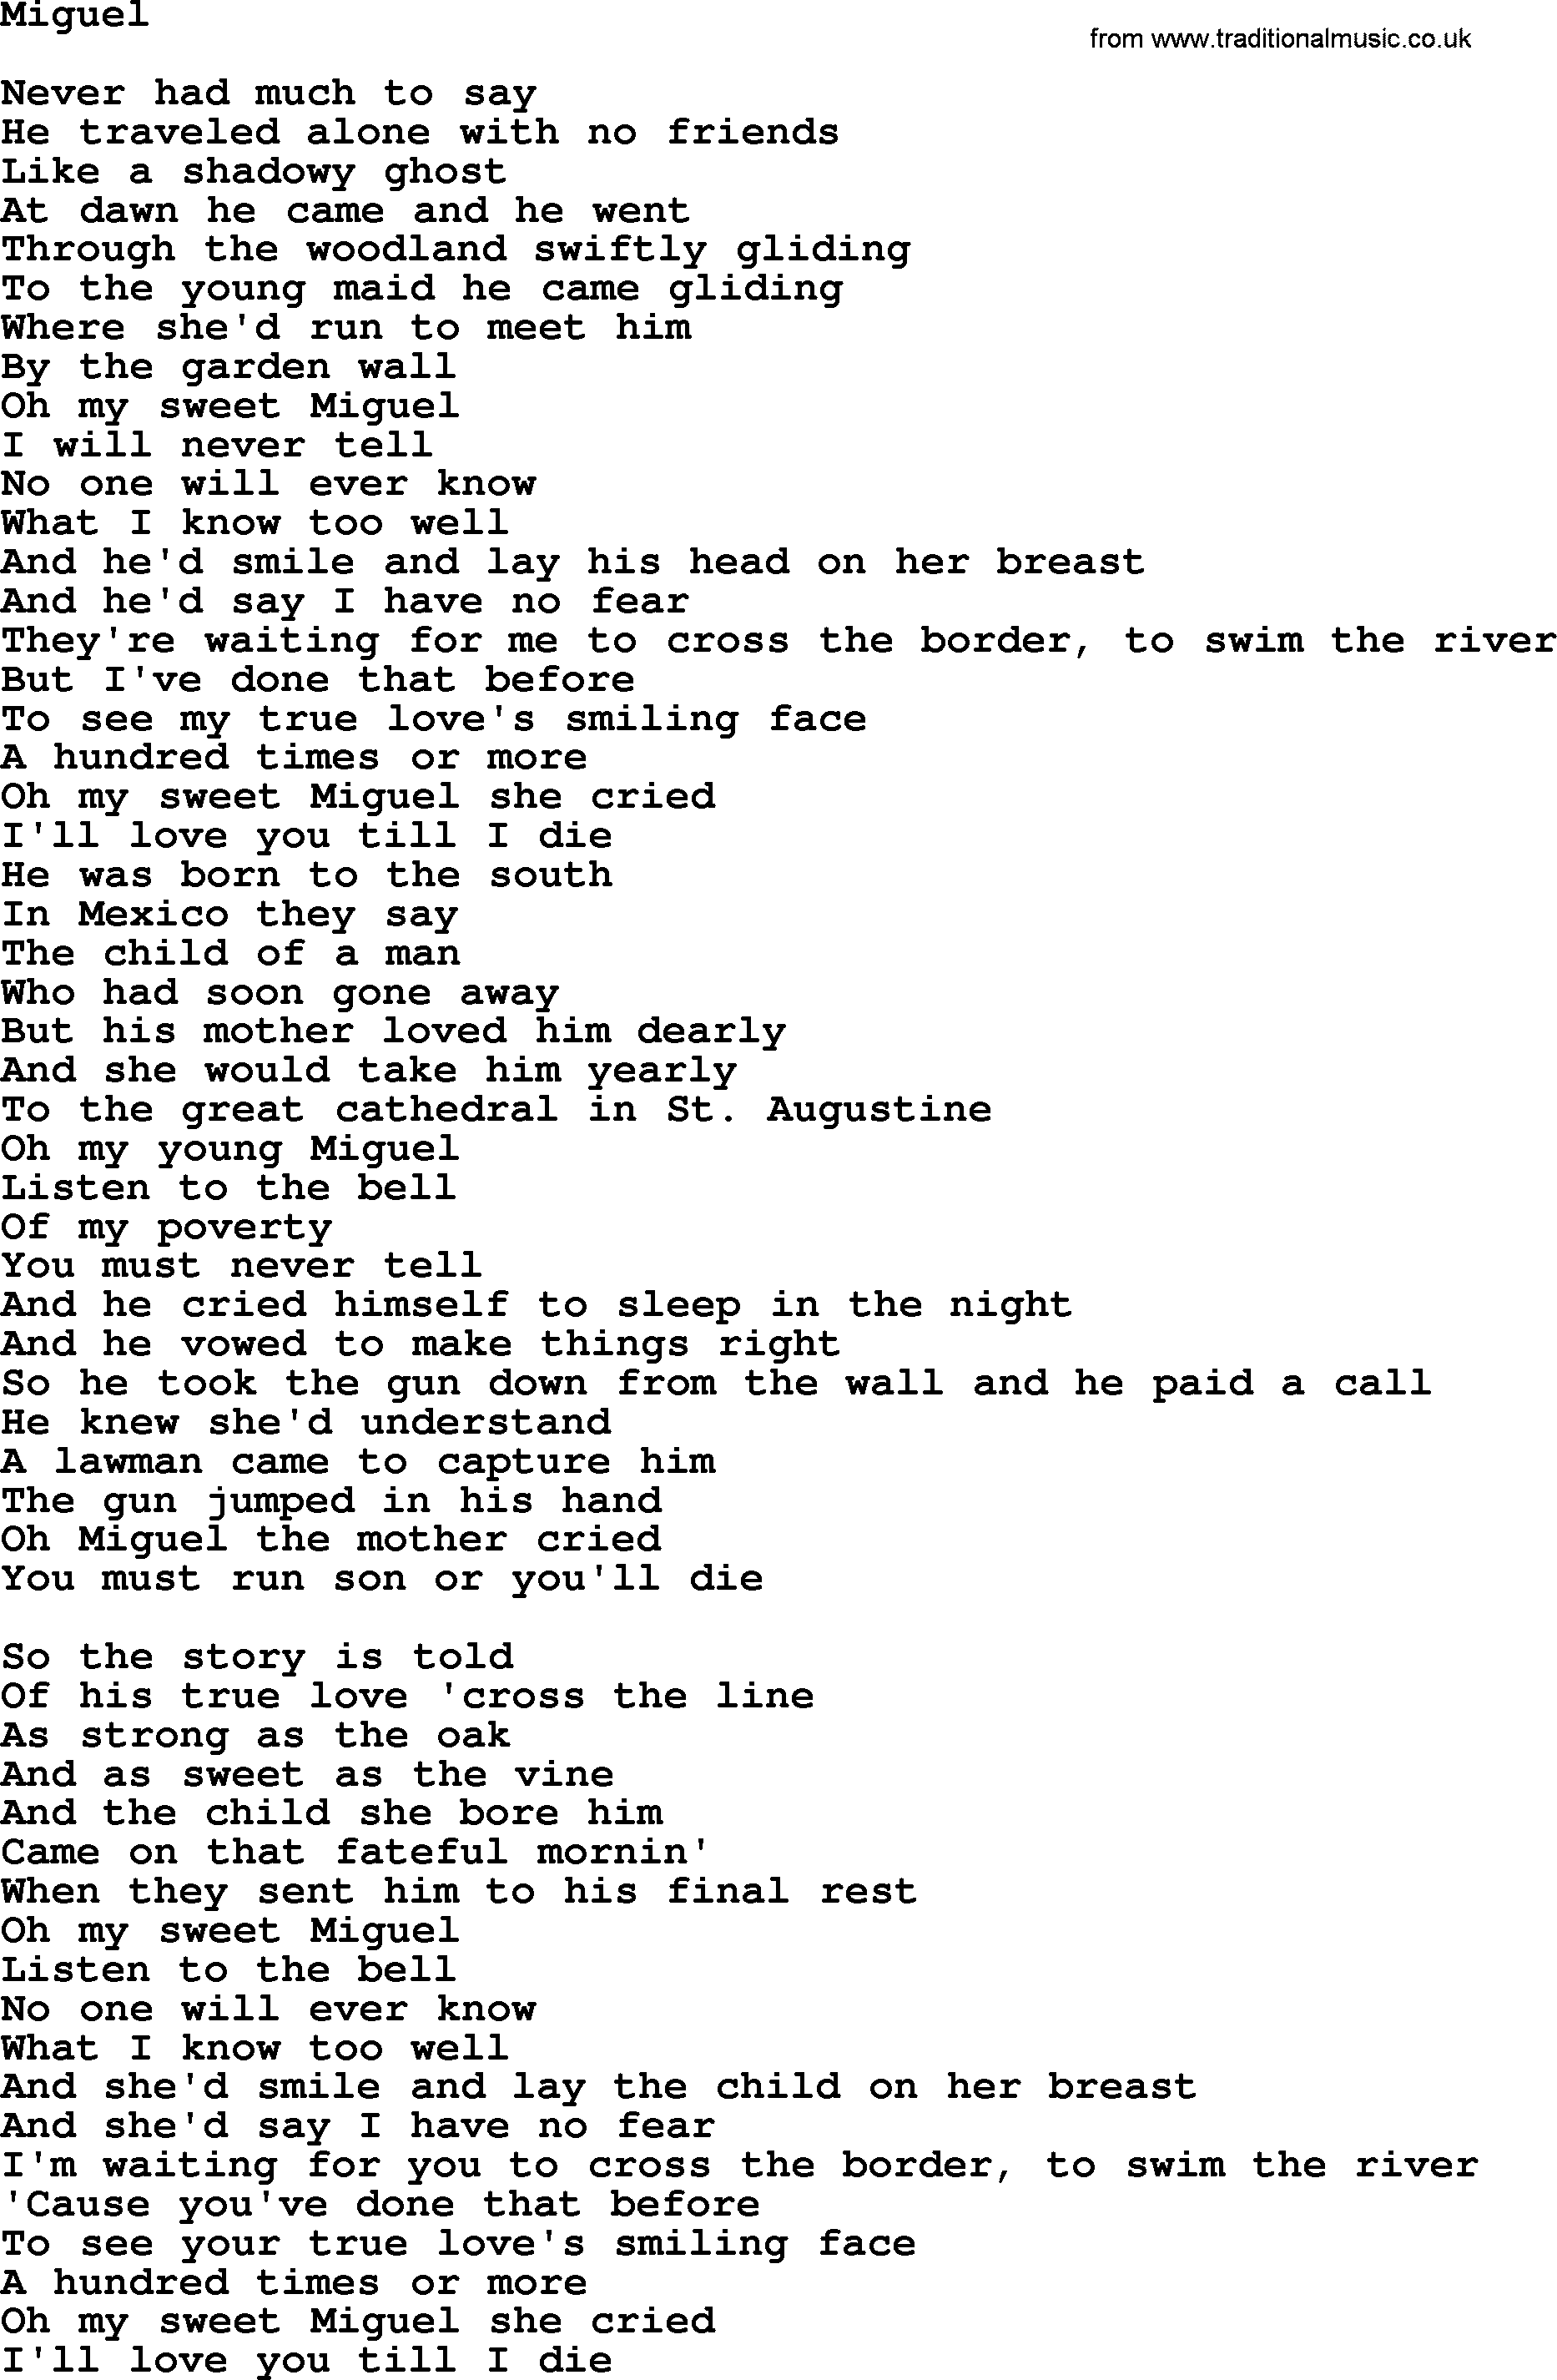 Gordon Lightfoot song Miguel, lyrics